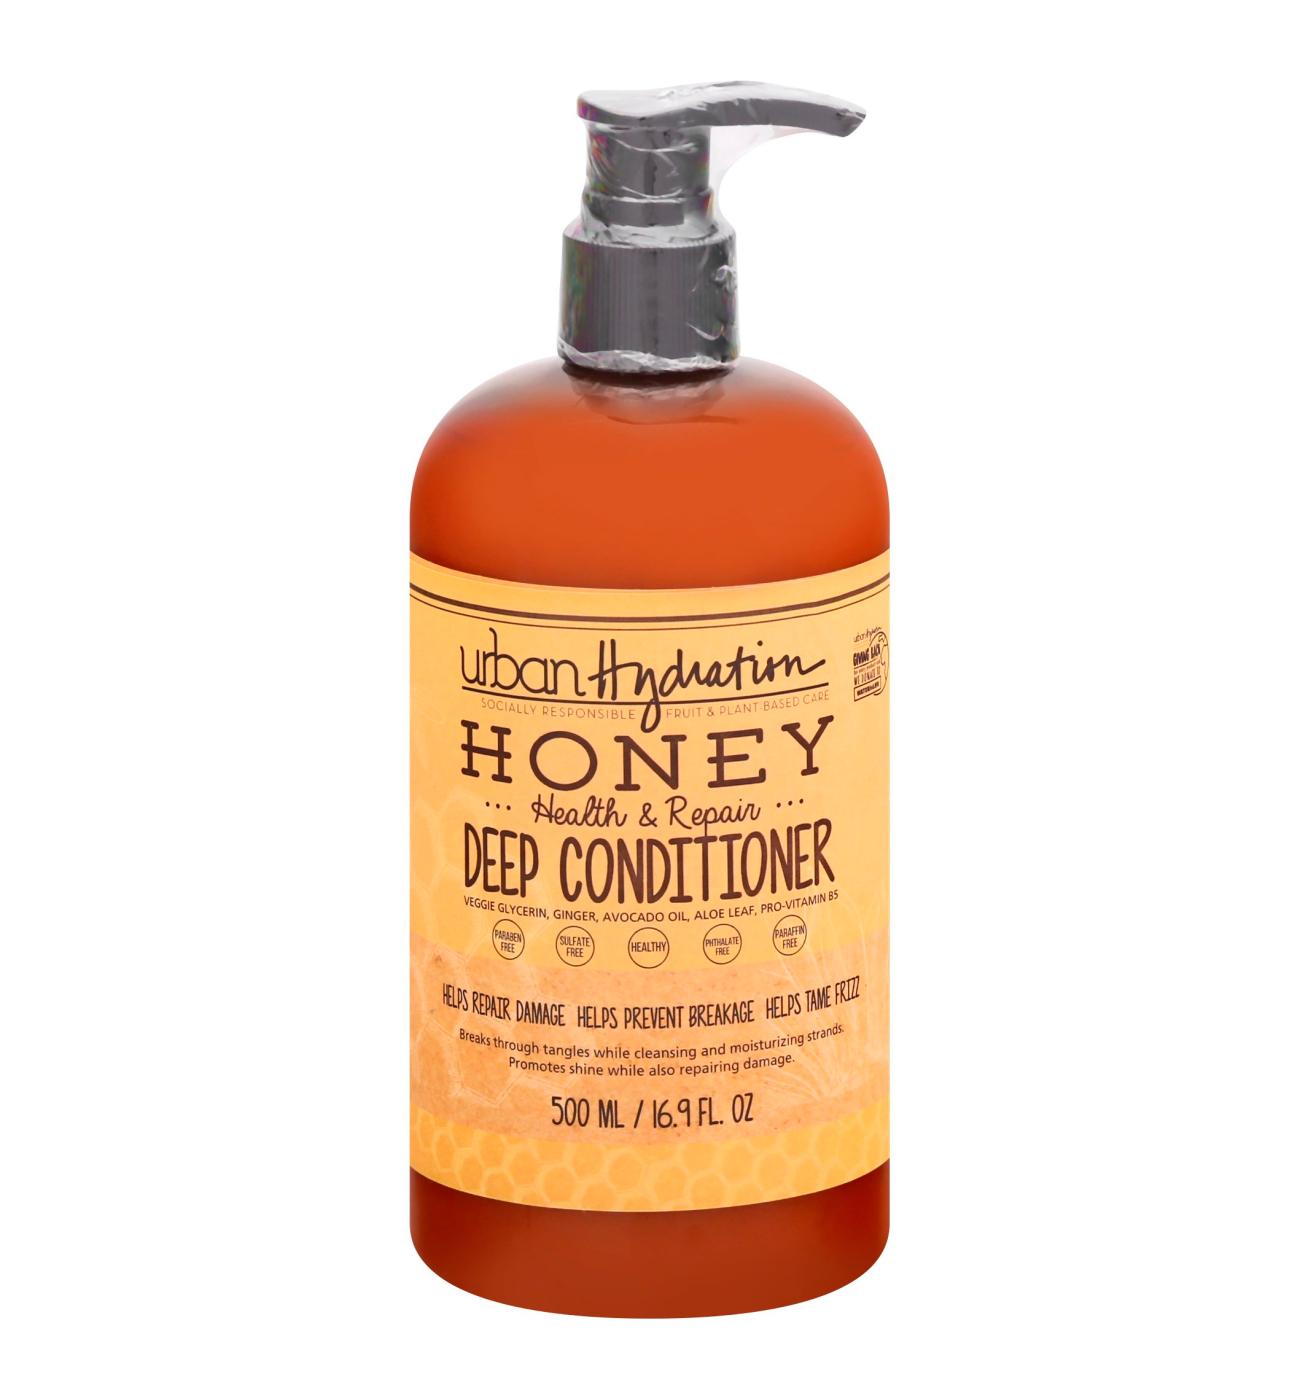 Urban Hydration Honey Health & Repair Deep Conditioner; image 1 of 2